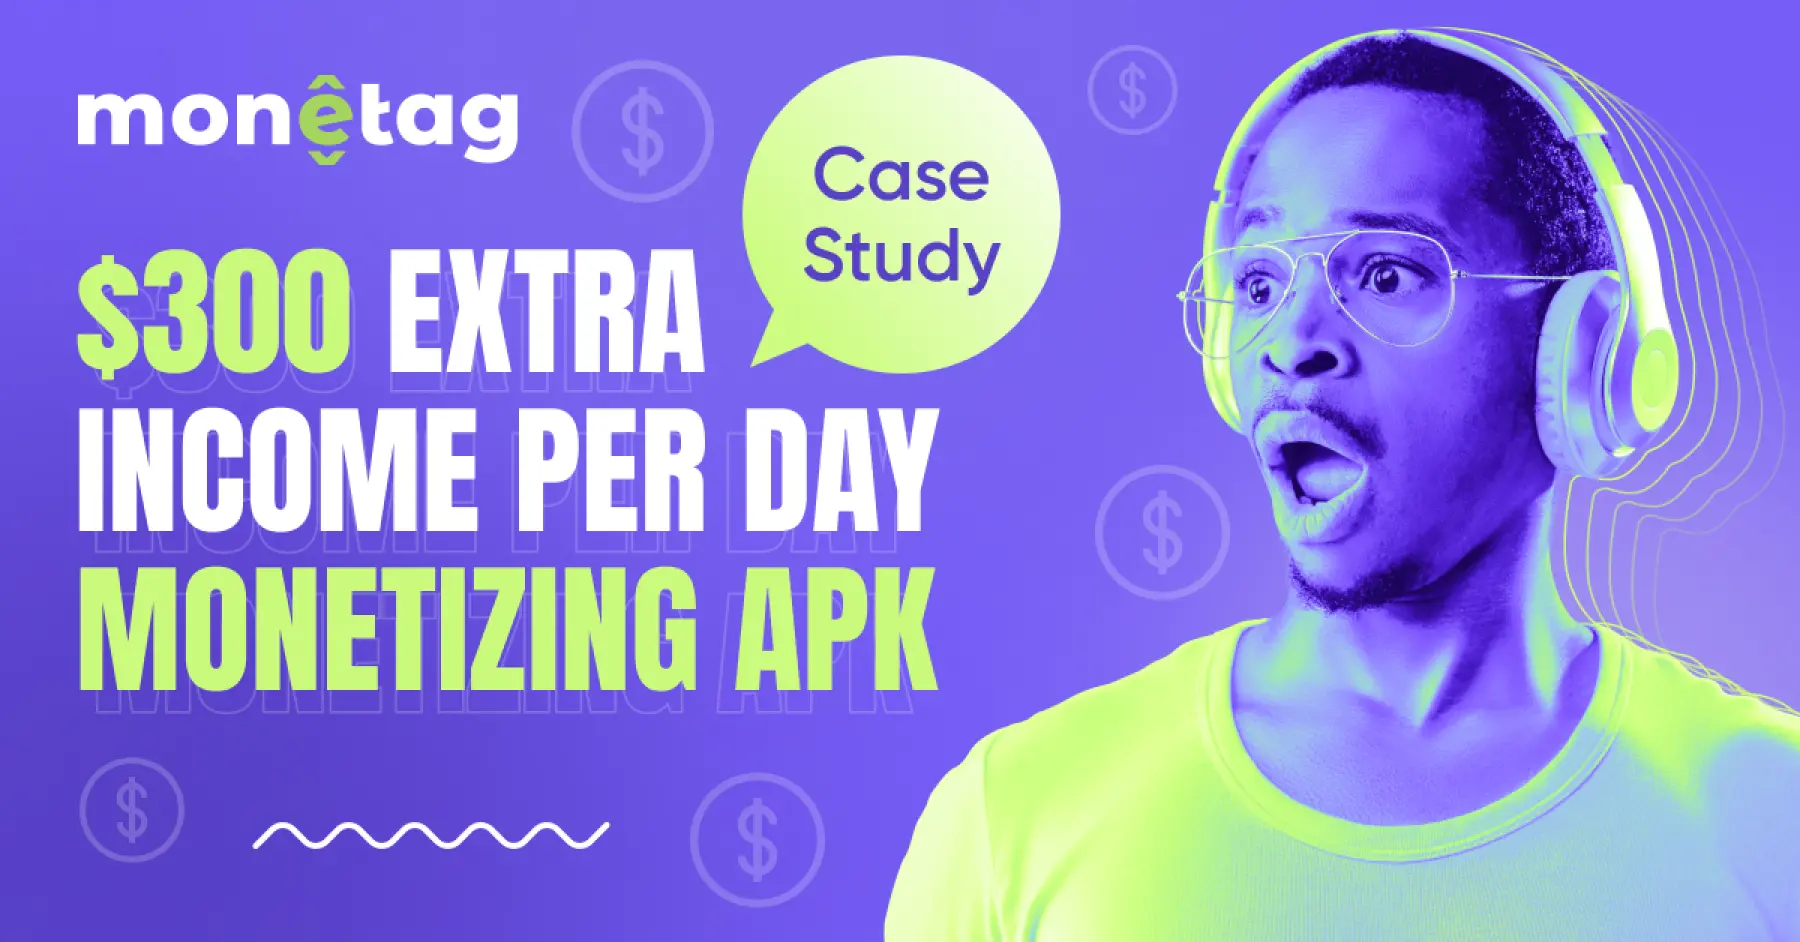 APK monetization case study